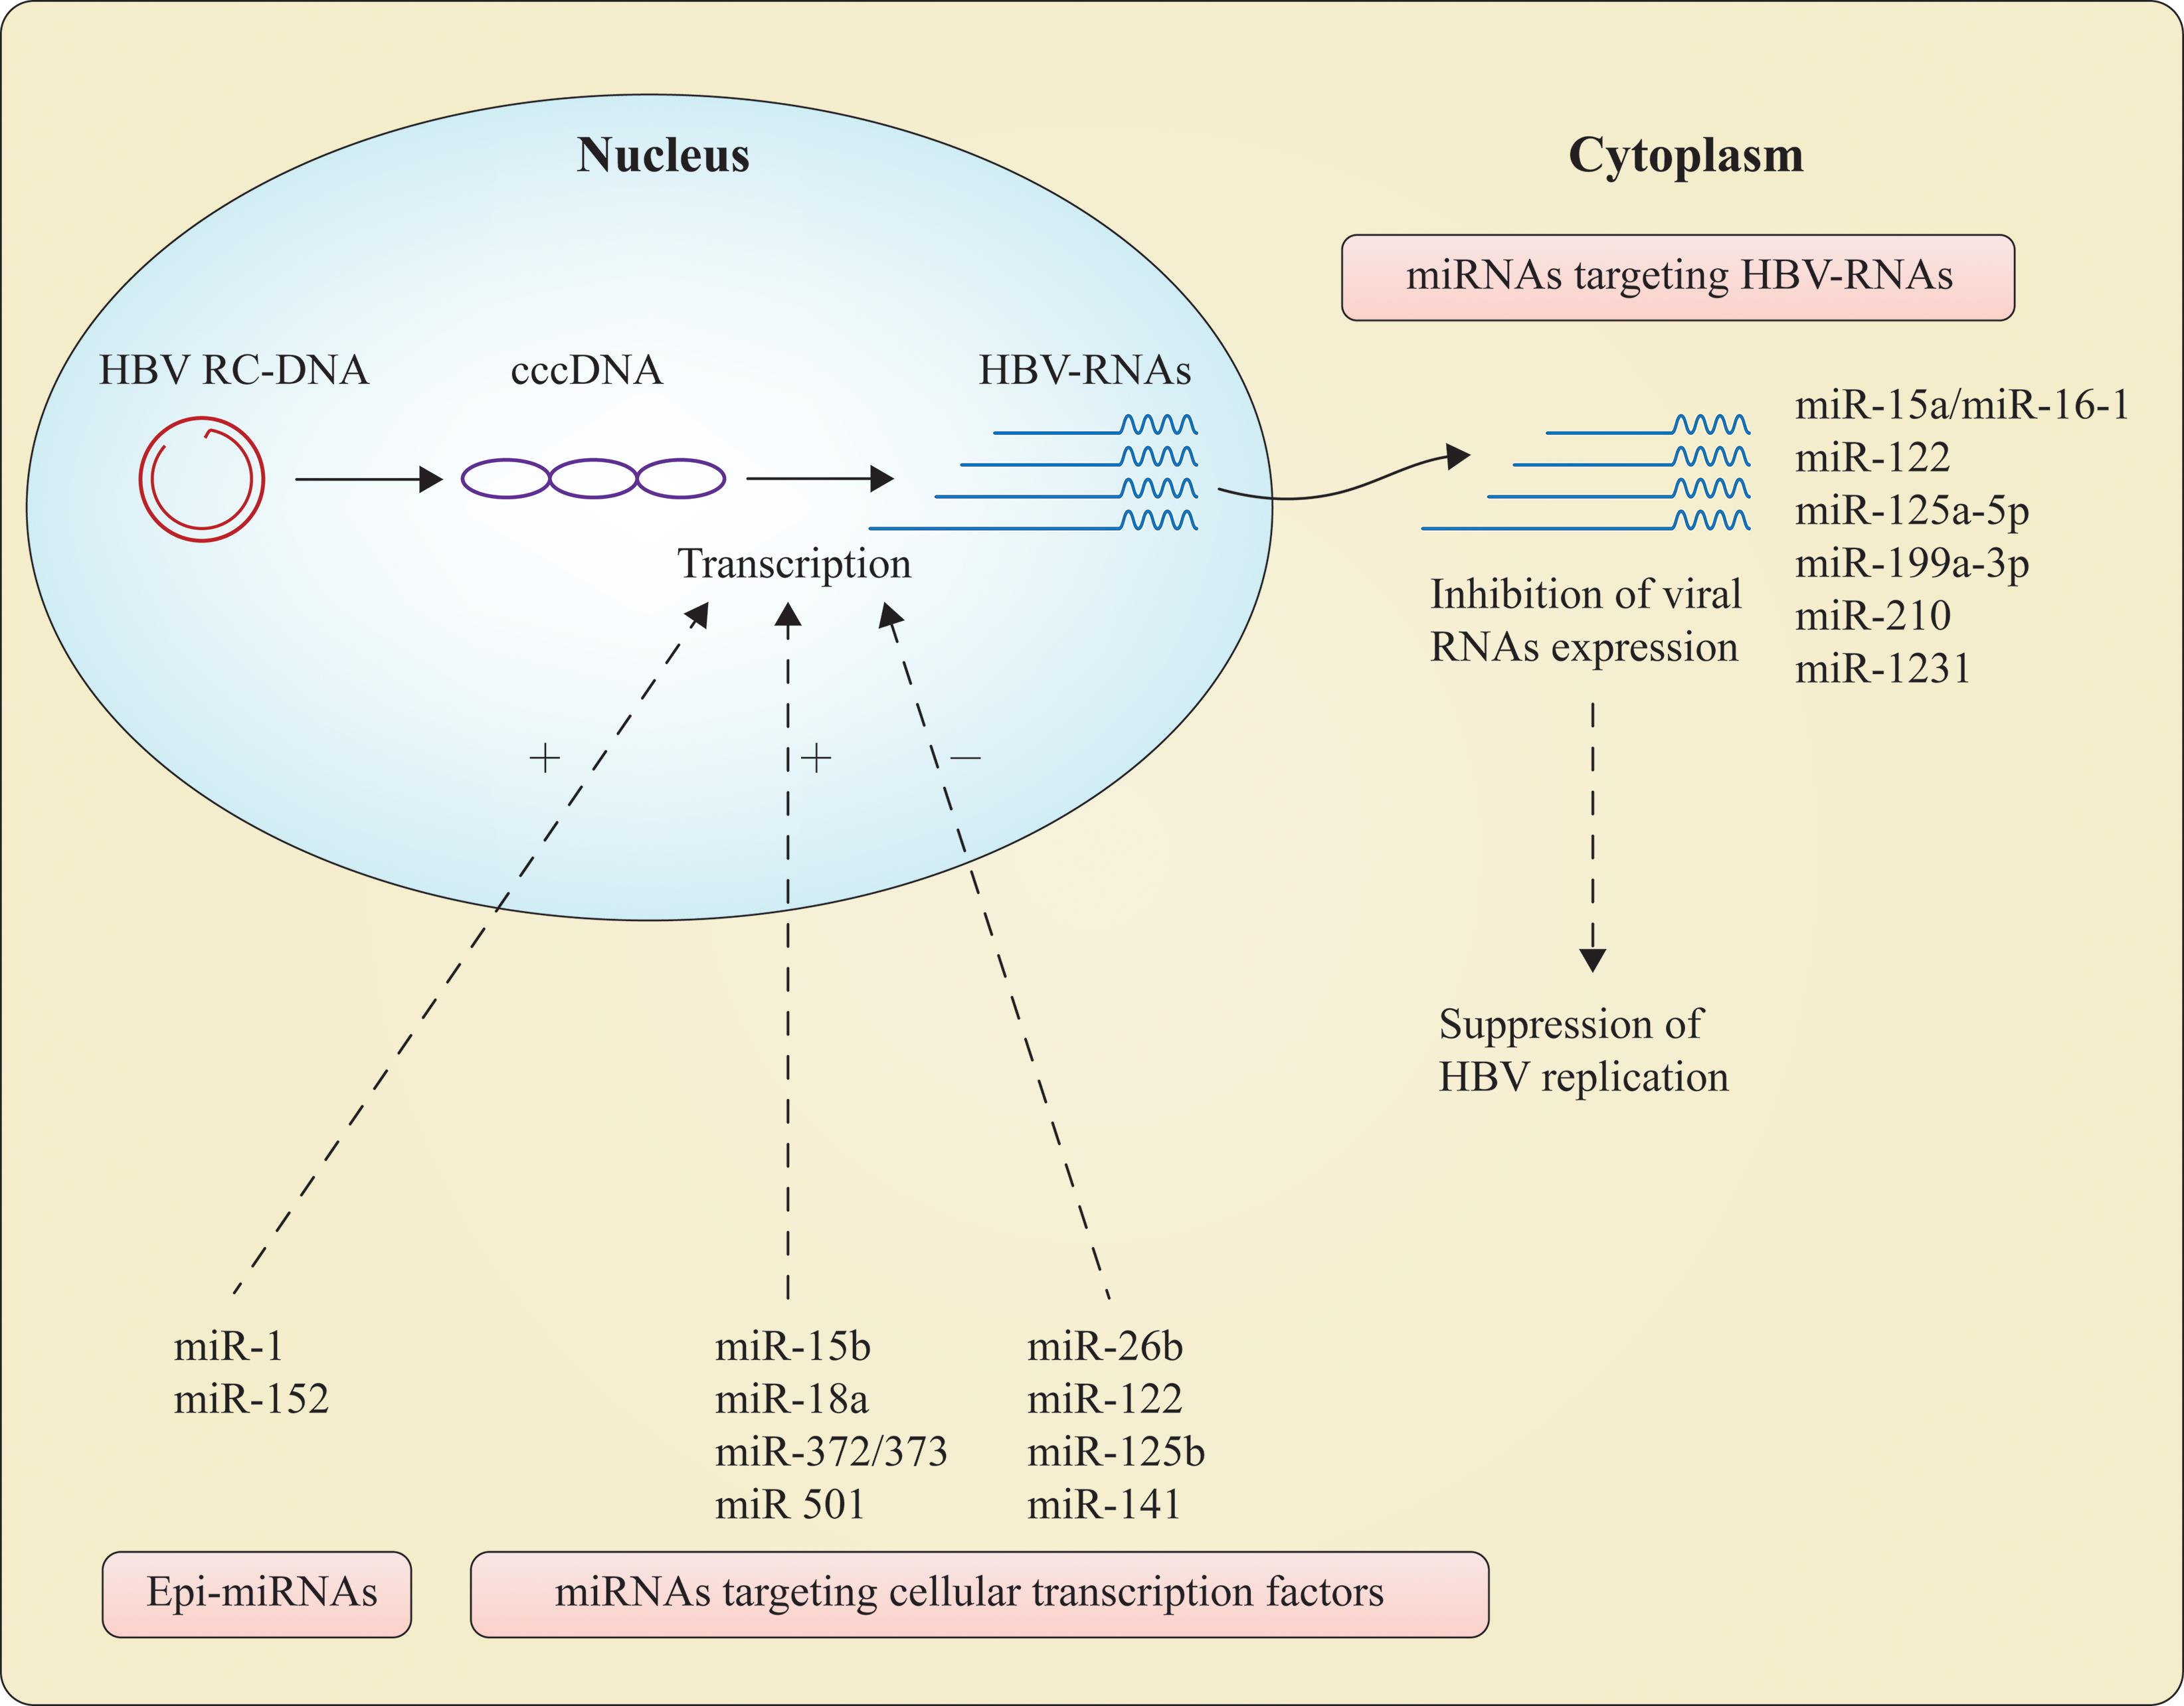 Summary of cellular miRNAs involved in the regulation of HBV replication.